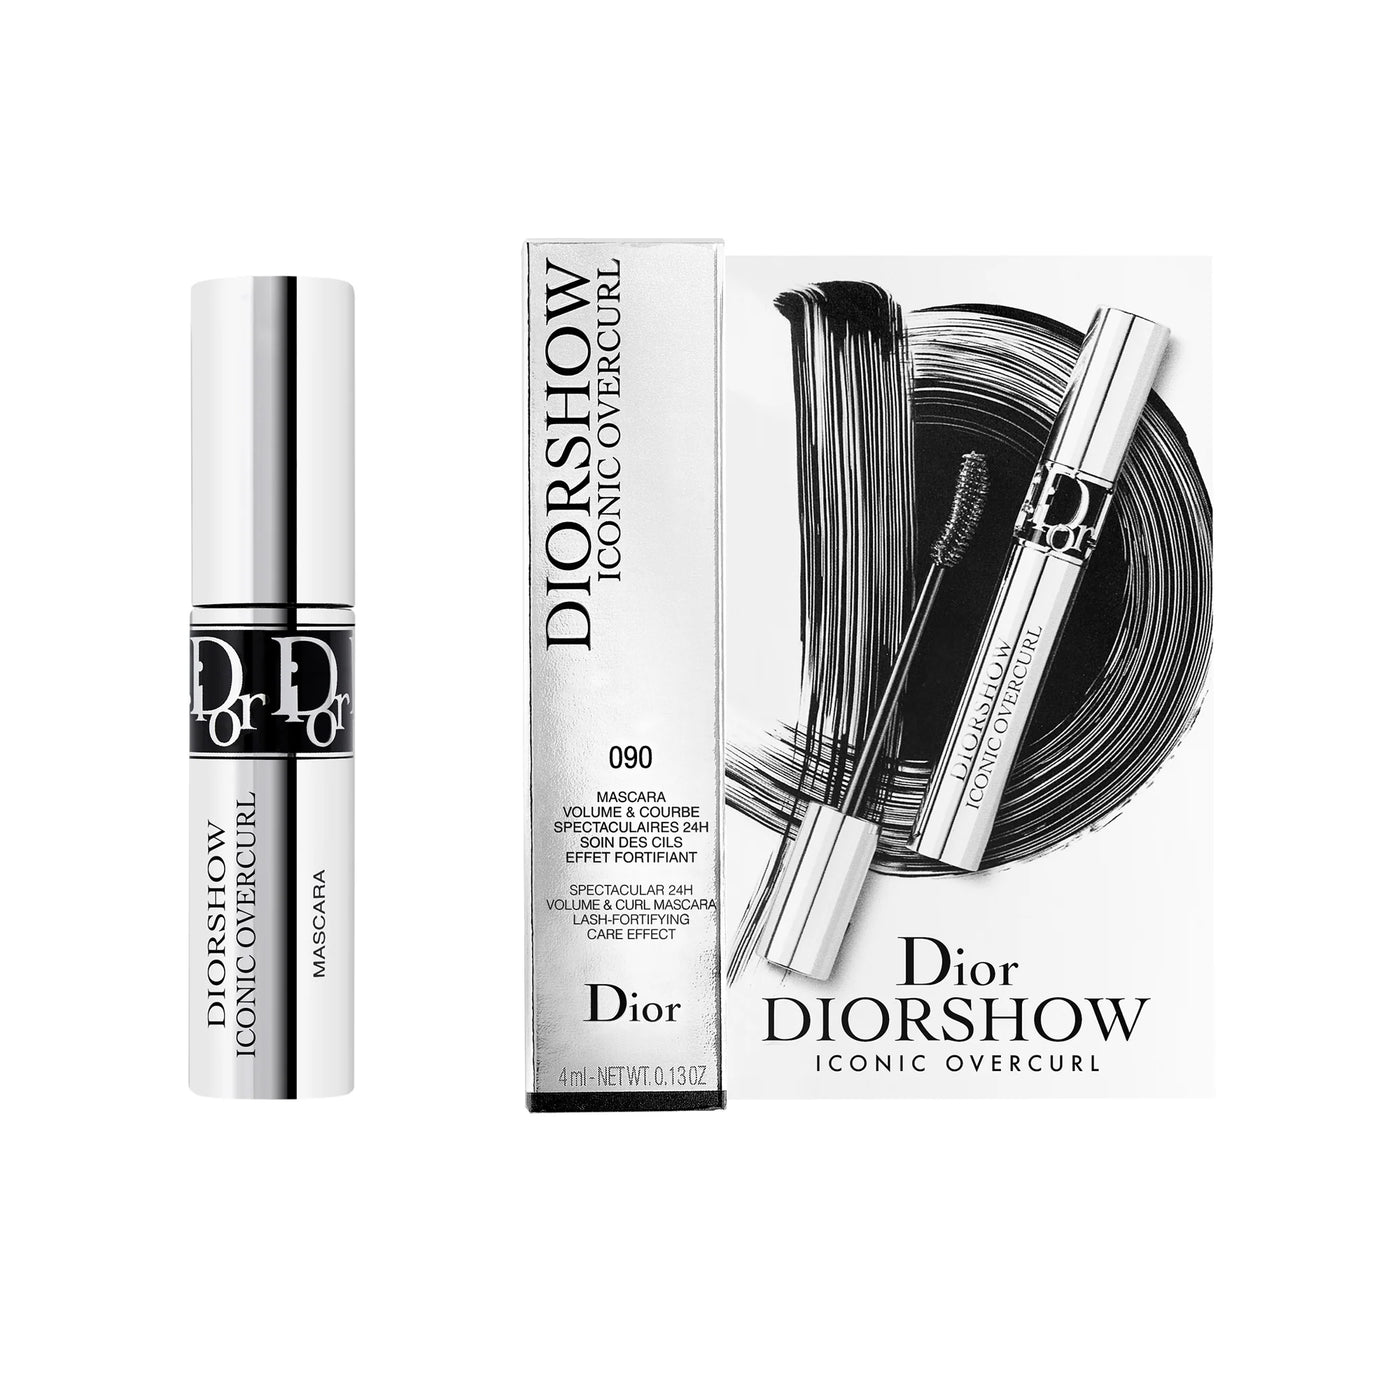 Mascara Dior Diorshow iconic overcurl 4ML